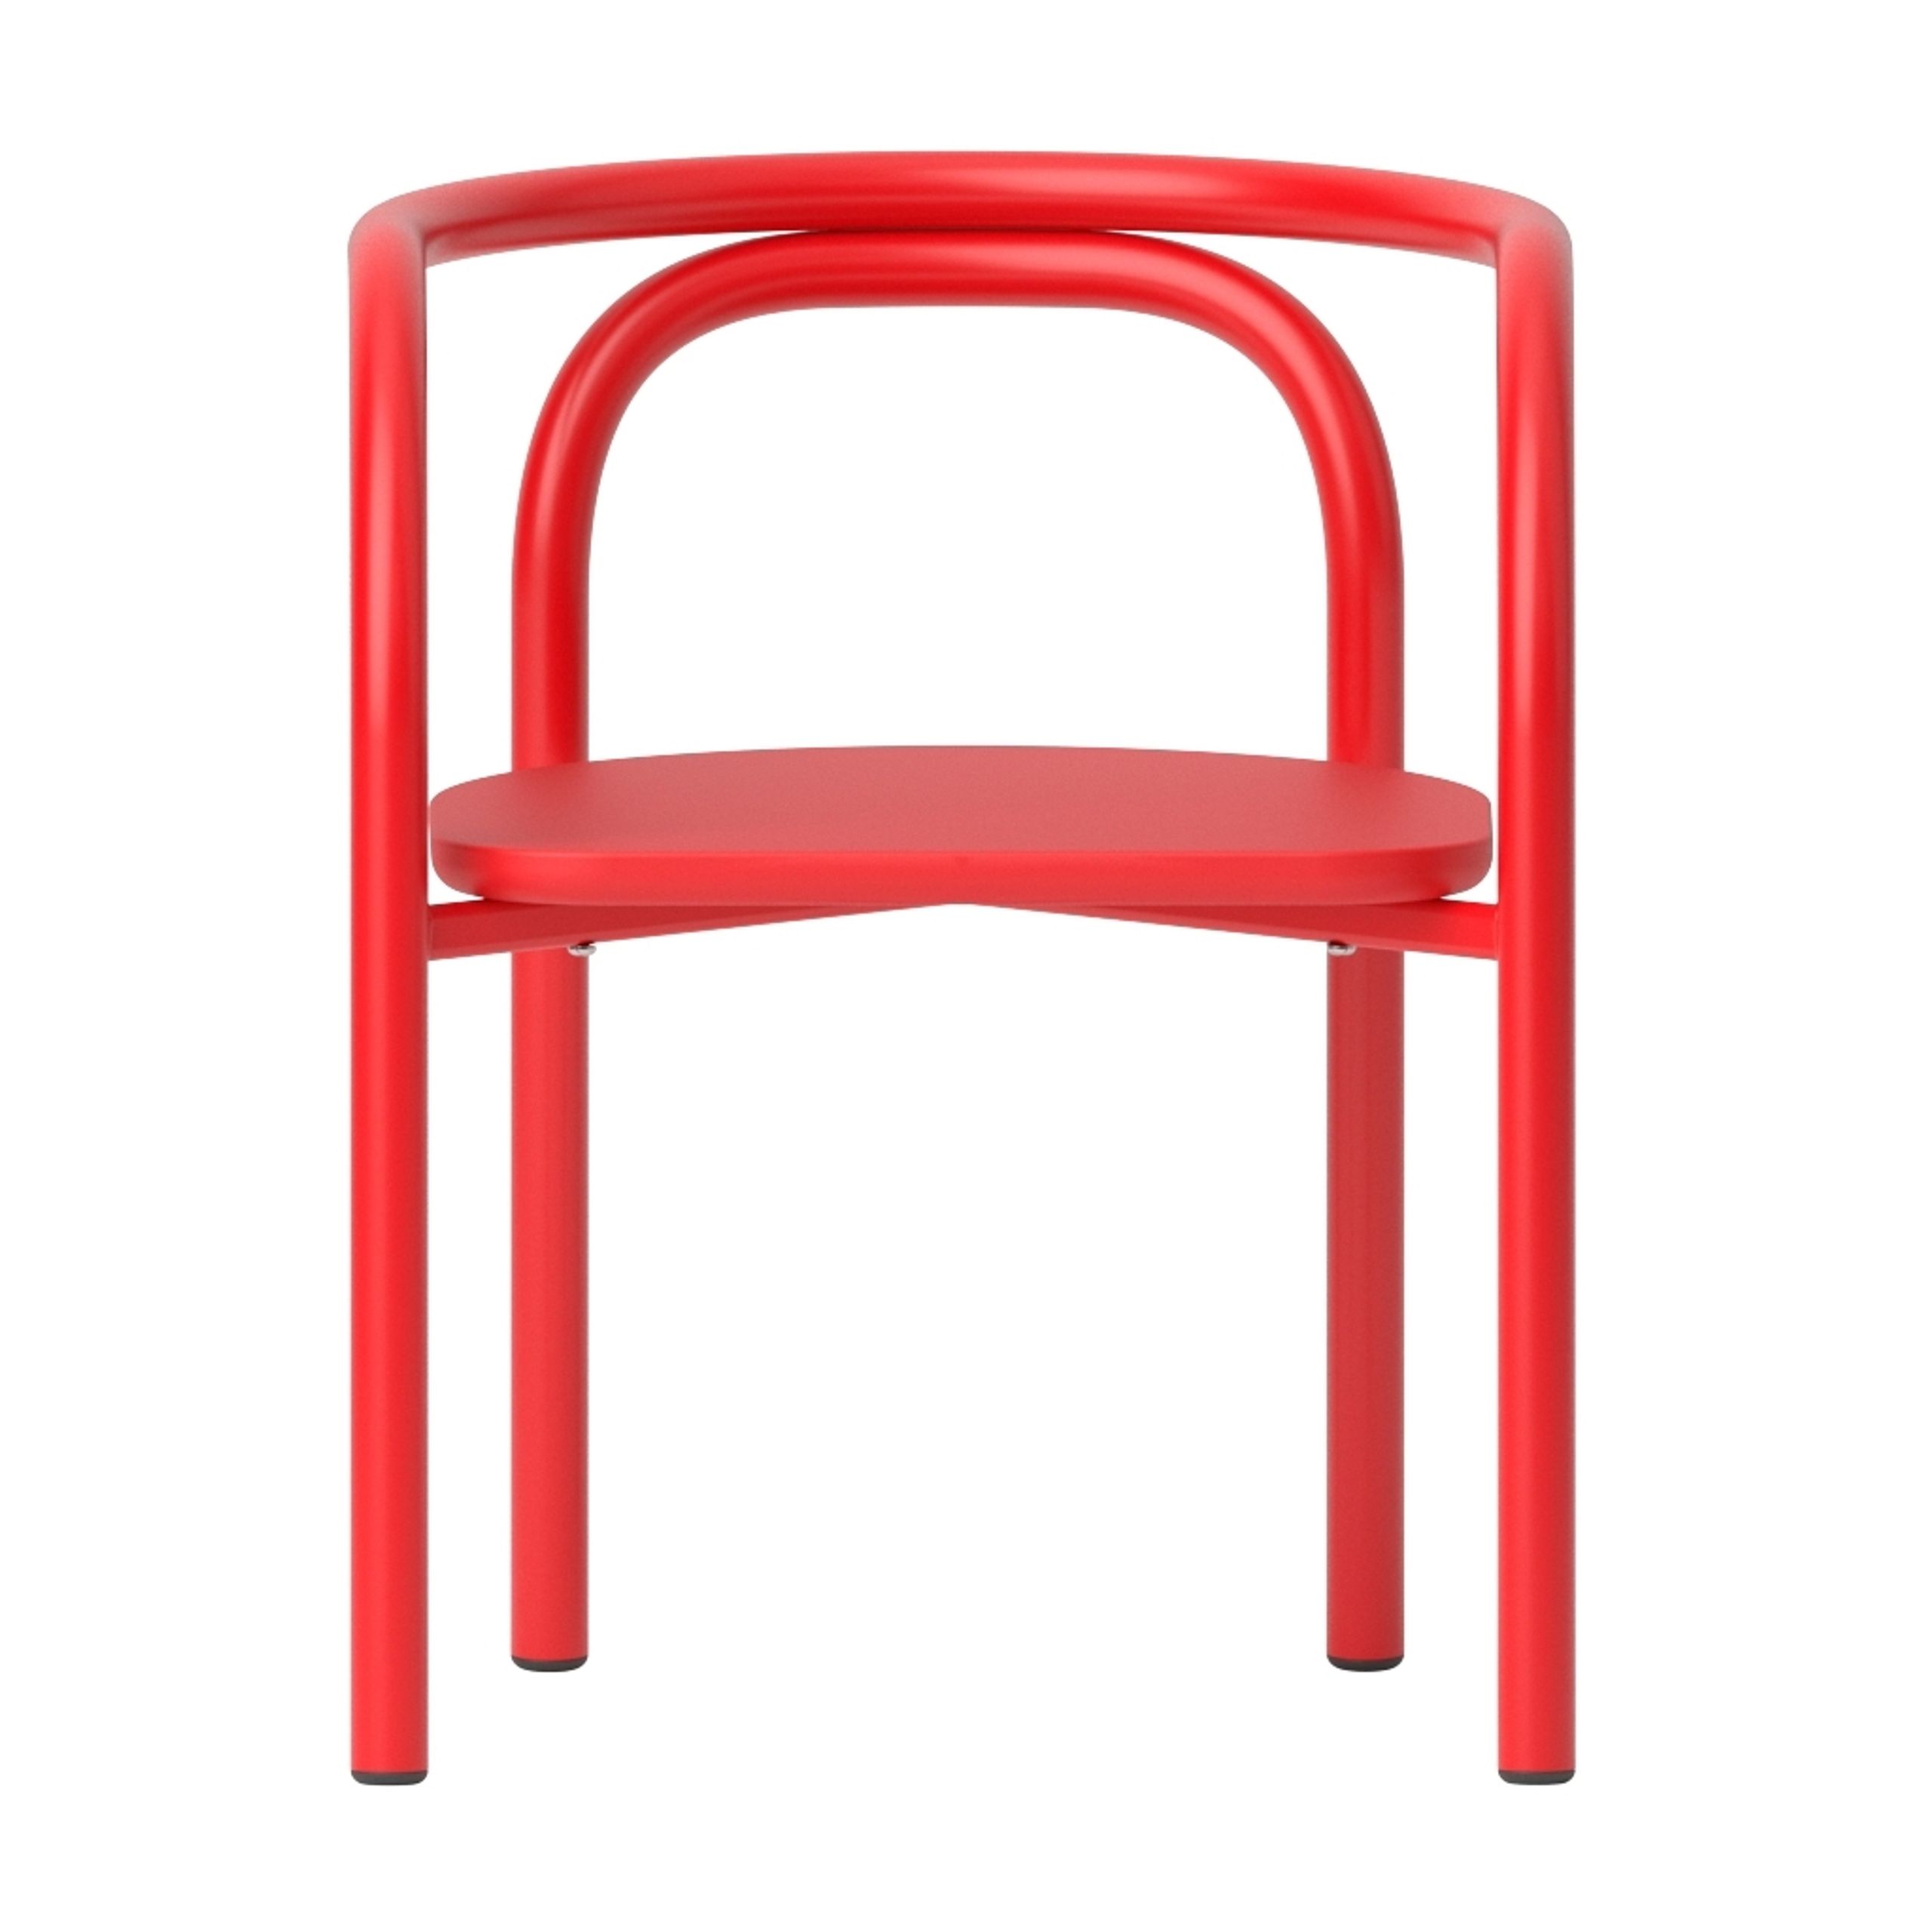 LIEWOOD - Børnestol - Baxter børnestol  - 2400 Apple red